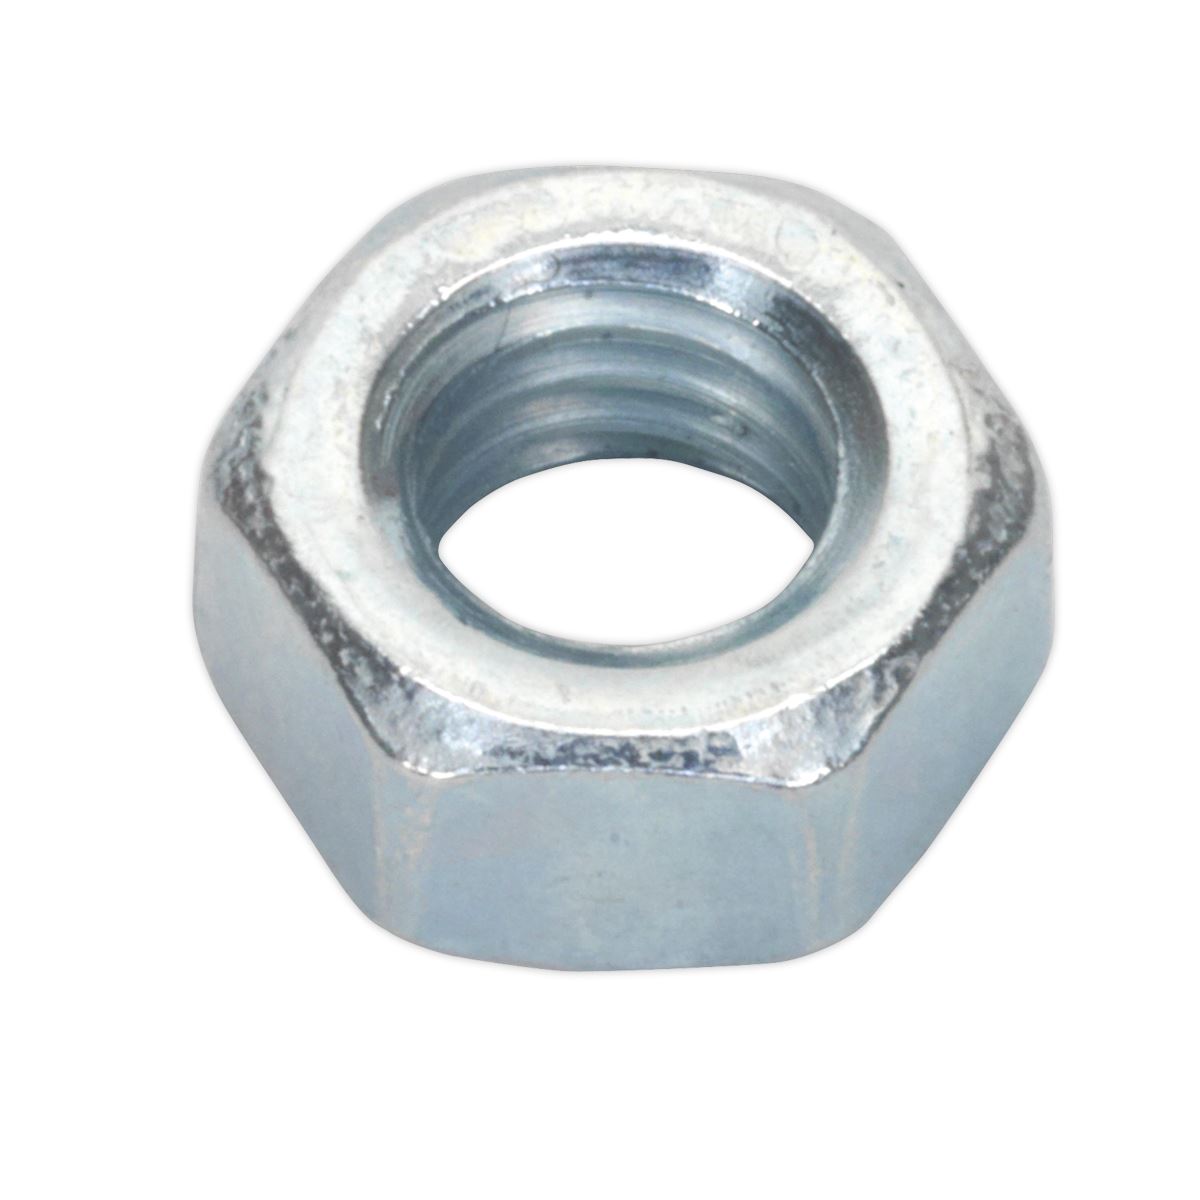 Sealey Steel Nut DIN 934 - M5 - Pack of 100